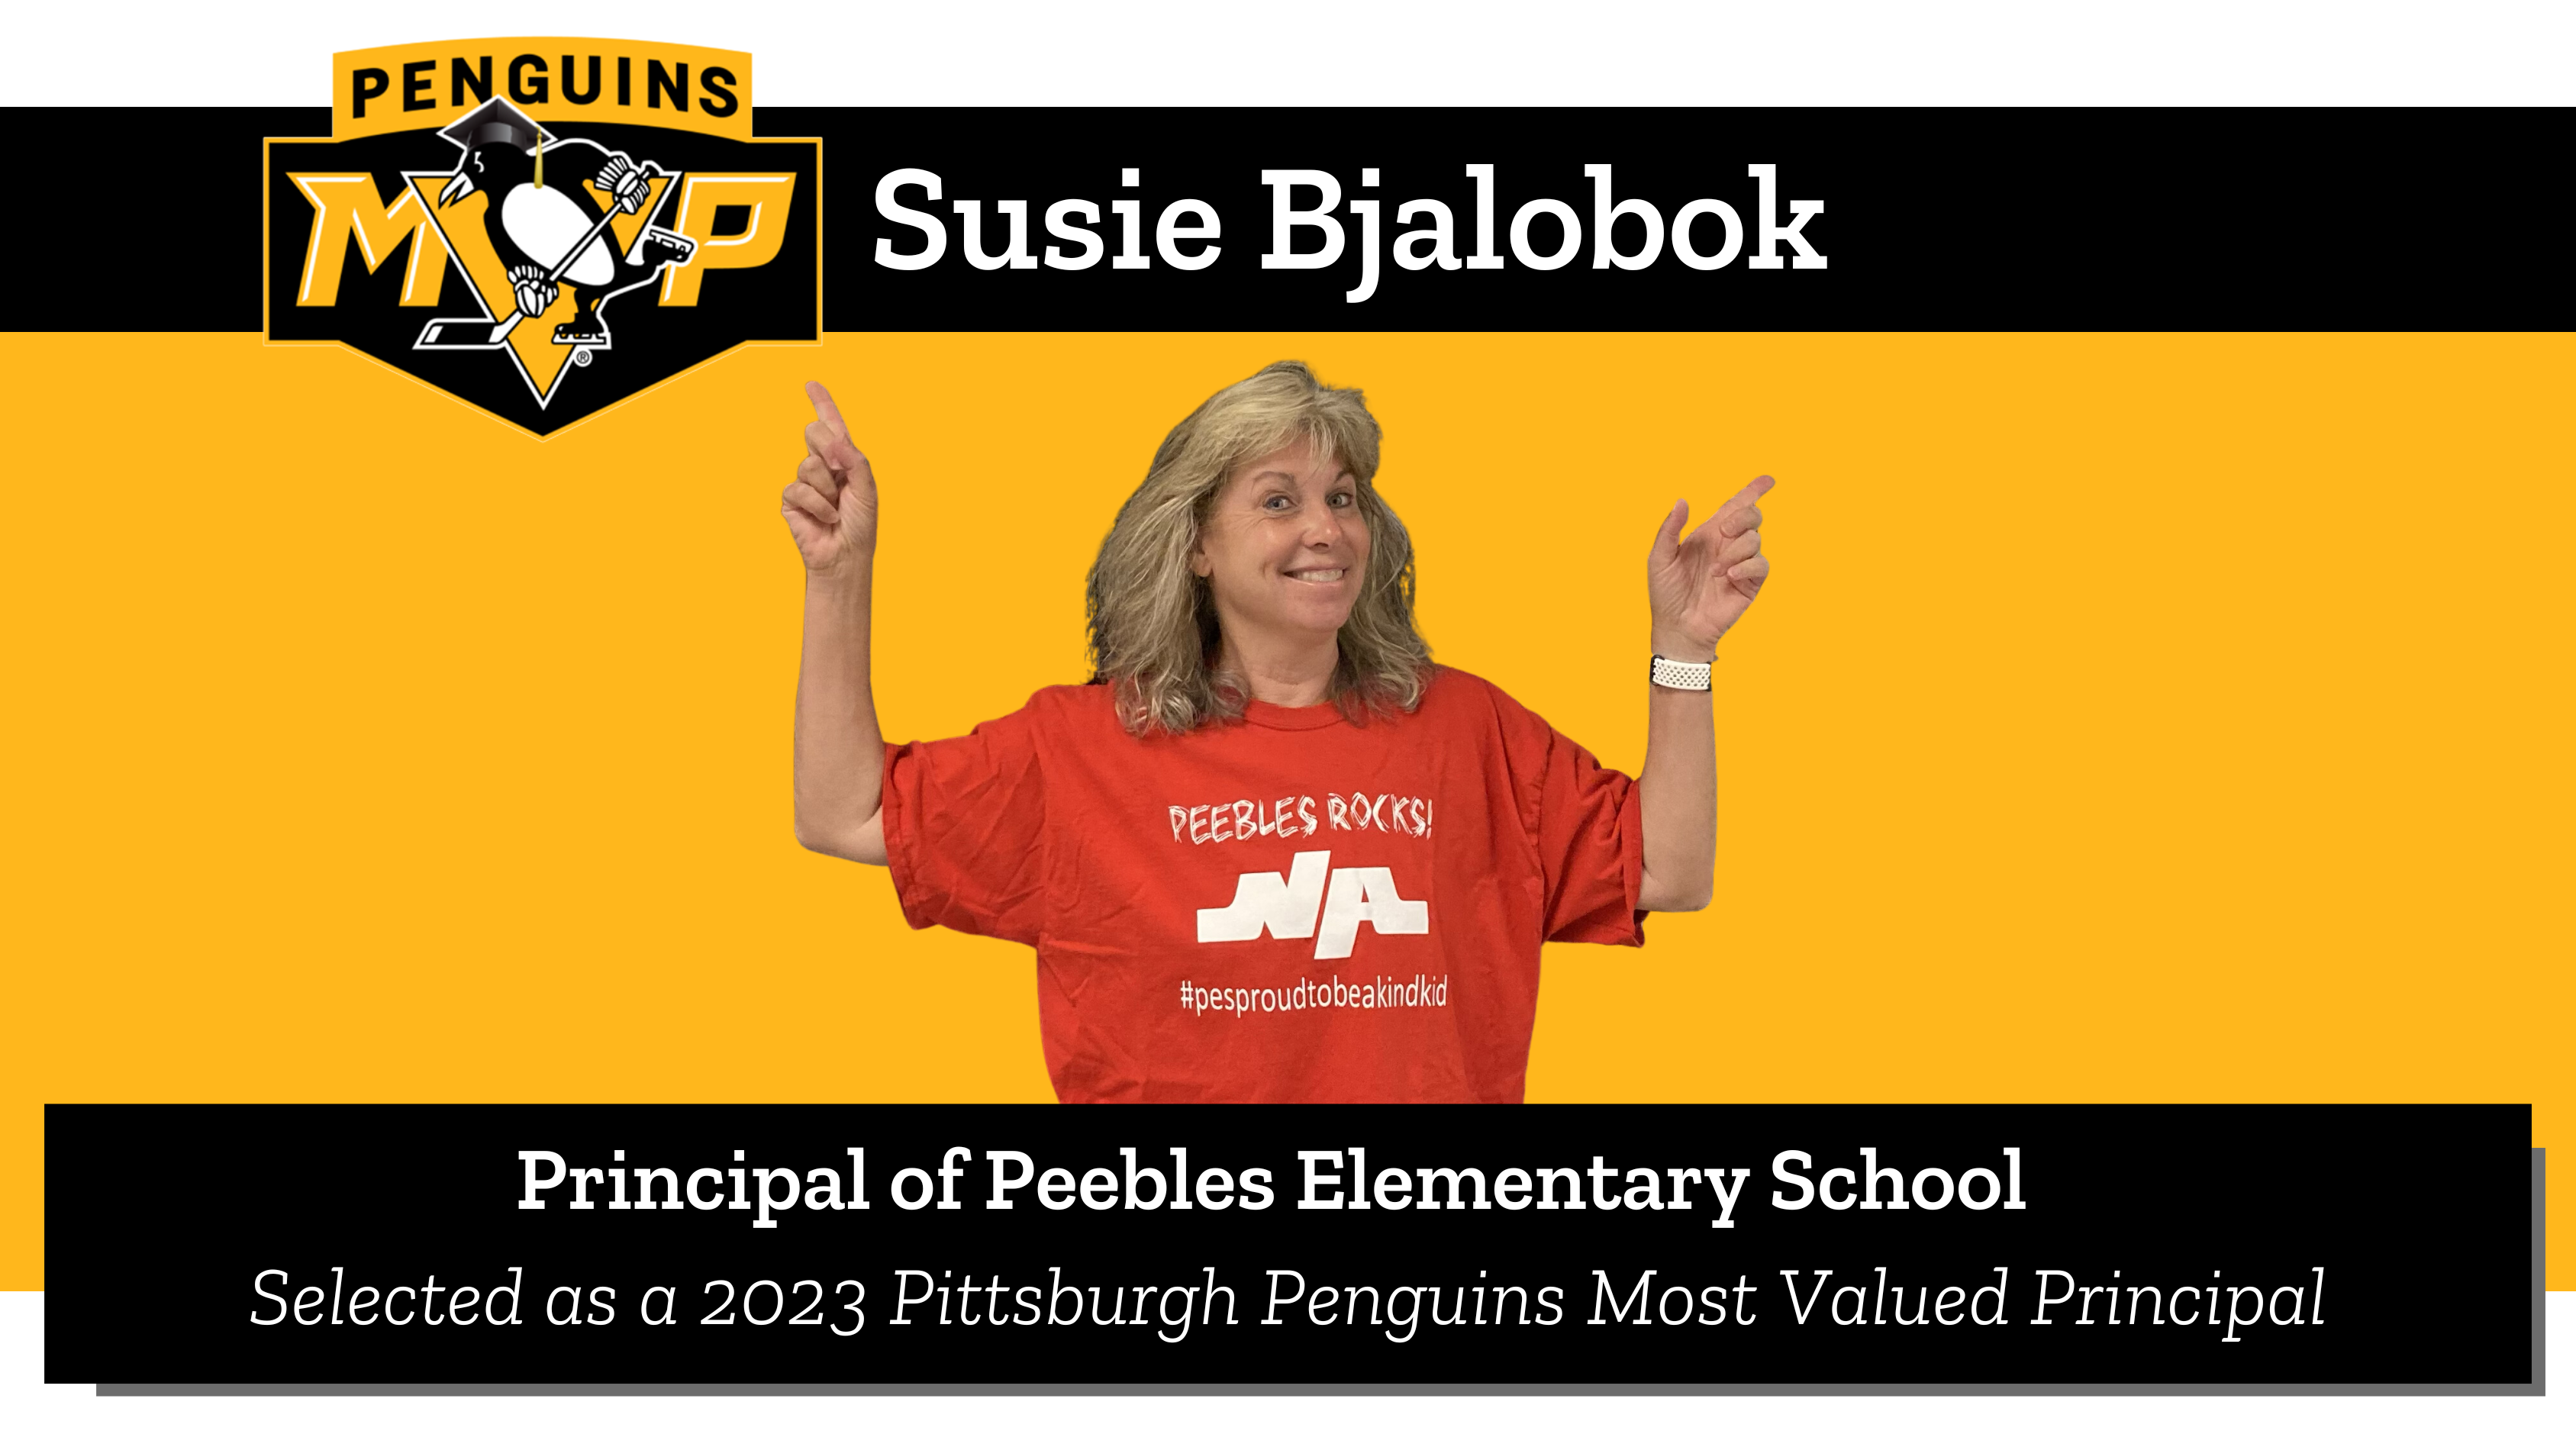 Pens MVP Susie Bjalobok, Principal of Peebles Elementary School